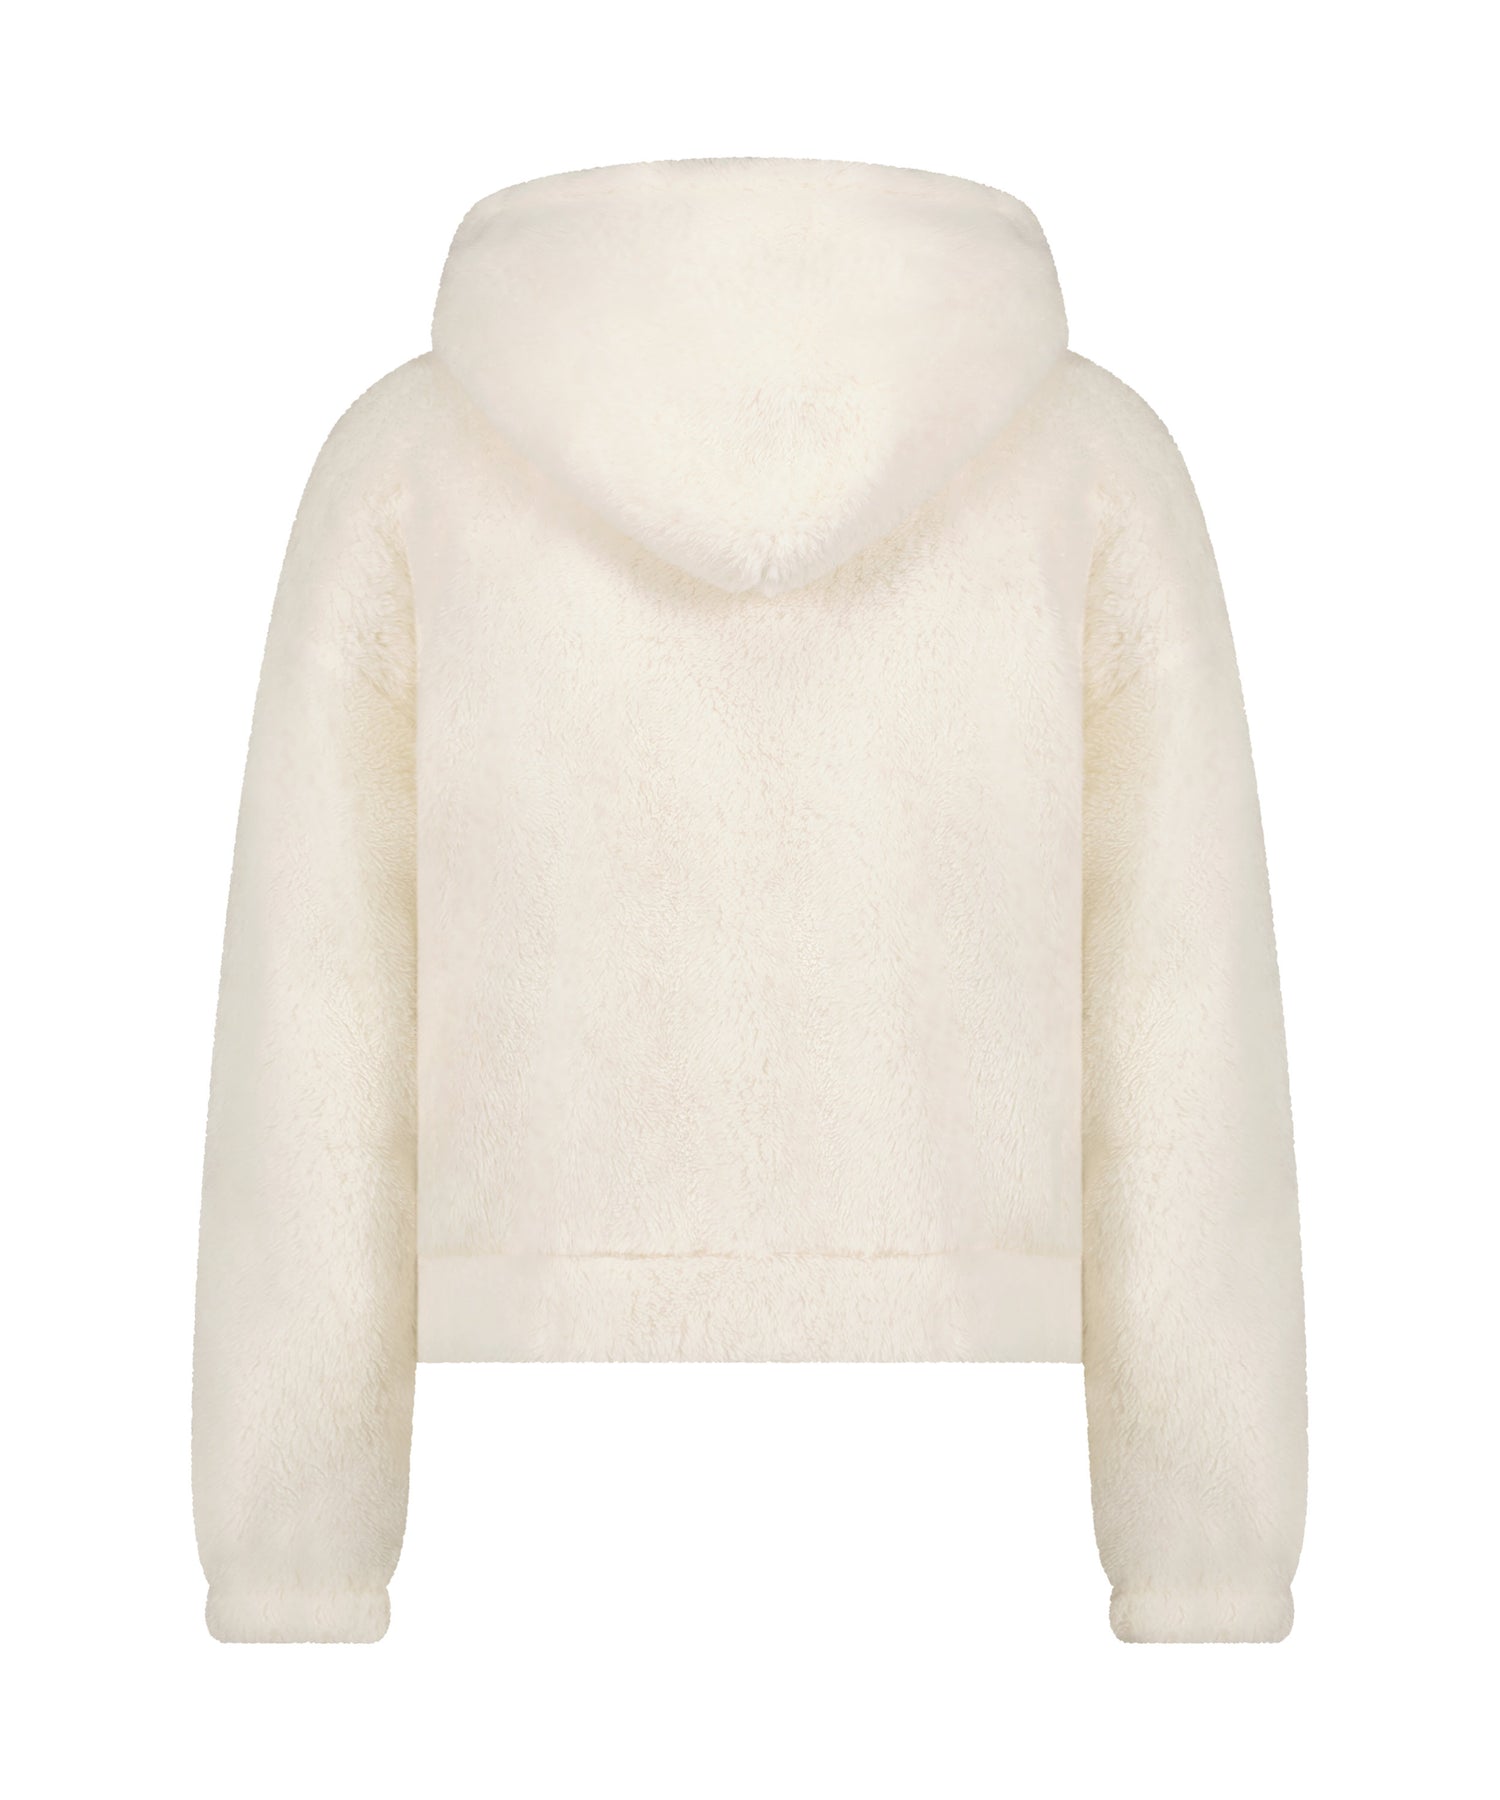 Jacket Long Sleeve Fleece Snuggle_204230_Snow White_06